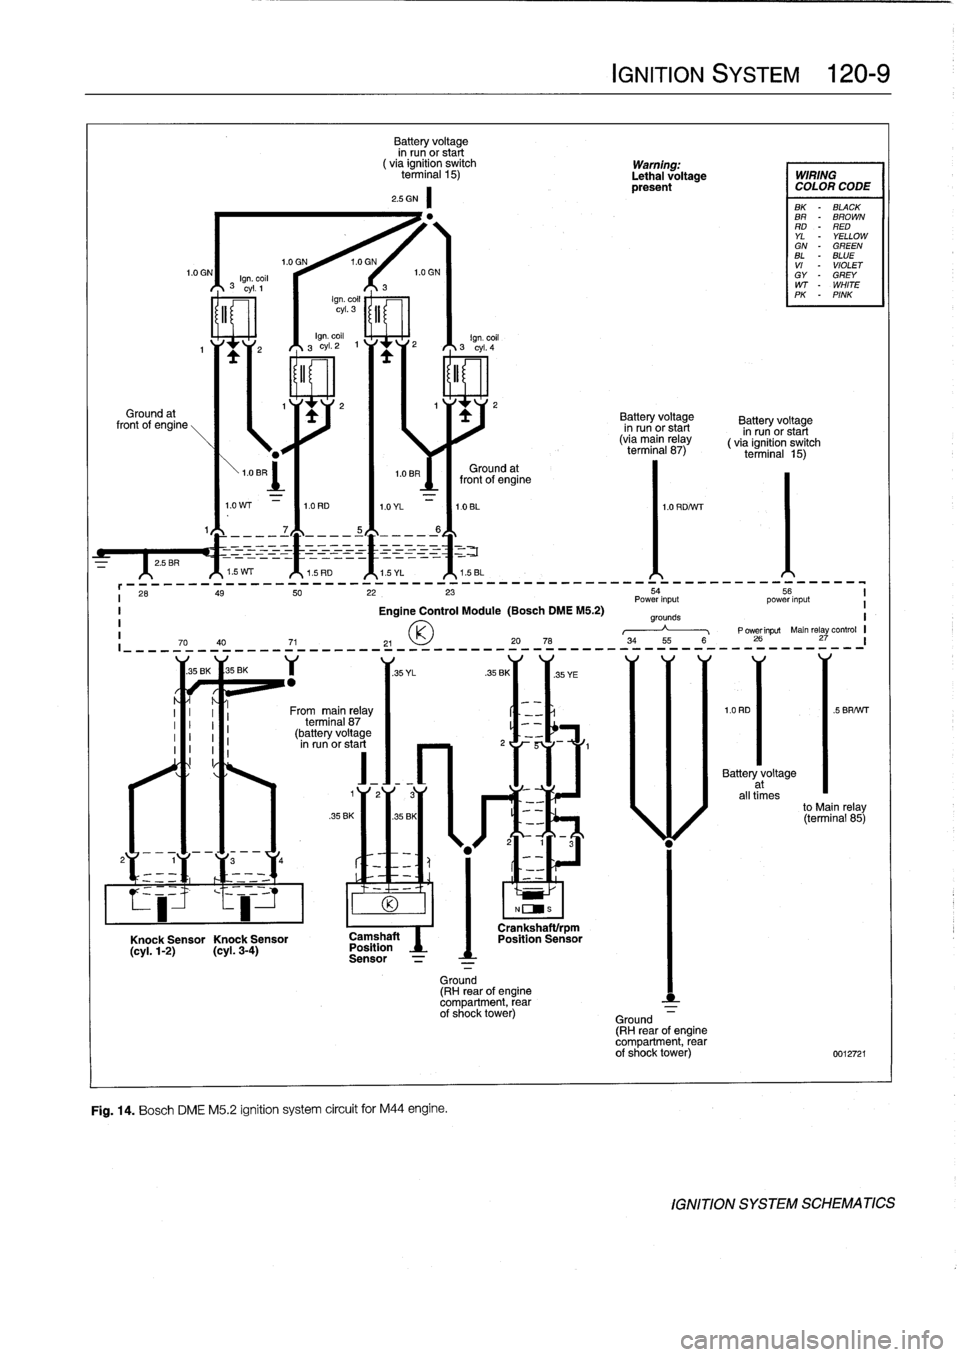 BMW 323i 1995 E36 Workshop Manual 
^1
.5WT
^1
.5RD
^1
.5YL
^1
.5BL
r

	

--__

	

____-

	

__-_

	

___-_

	

-___-_____--__--

	

-____-___

	

____-
i
26
g
5022
23

	

54

	

5

I

	

Power
input

	

power
input
I

	

Engine
Contro